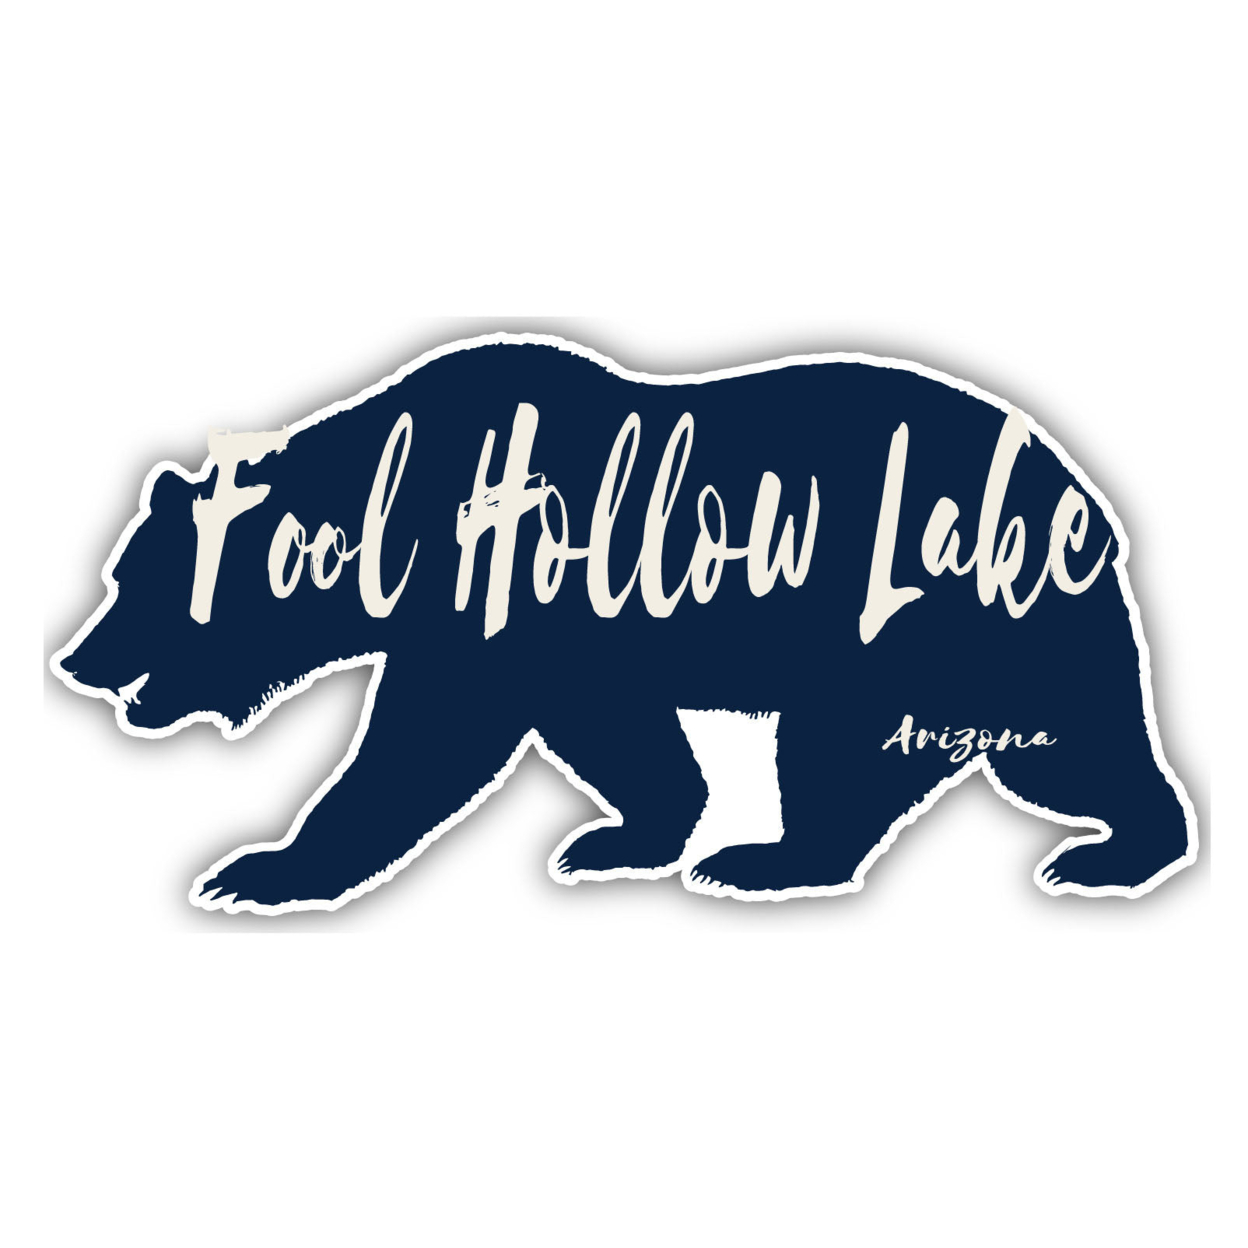 Fool Hollow Lake Arizona Souvenir Decorative Stickers (Choose Theme And Size) - Single Unit, 4-Inch, Tent